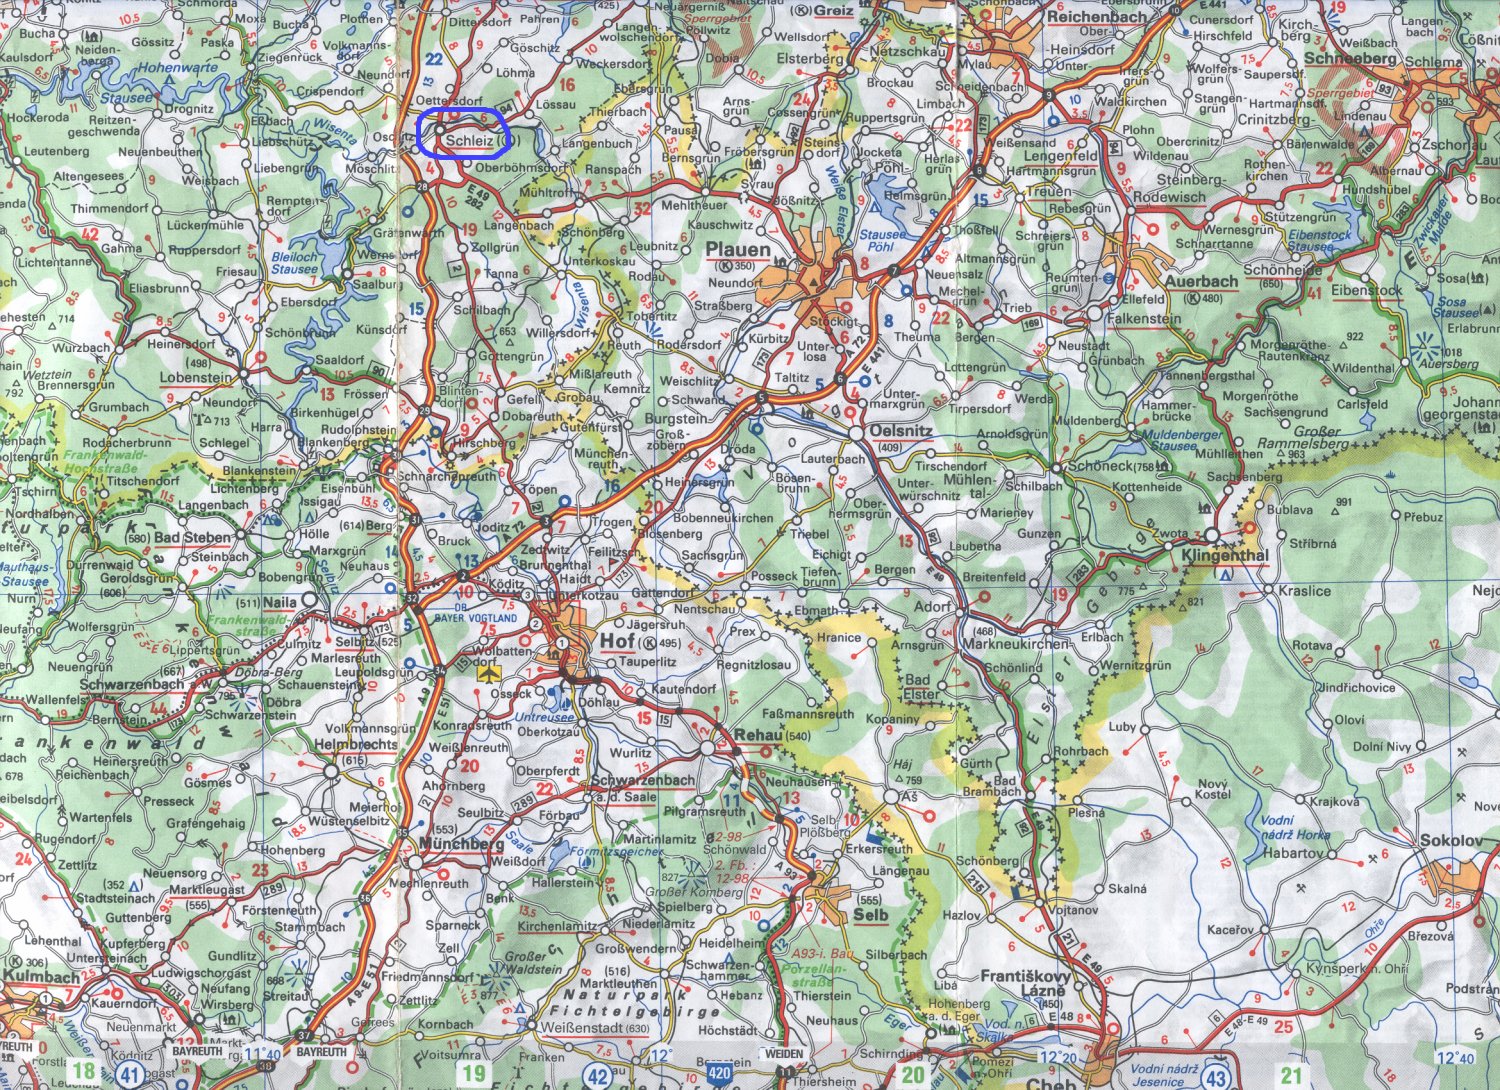 Guide to Bach Tour: Schleiz - Maps1500 x 1090